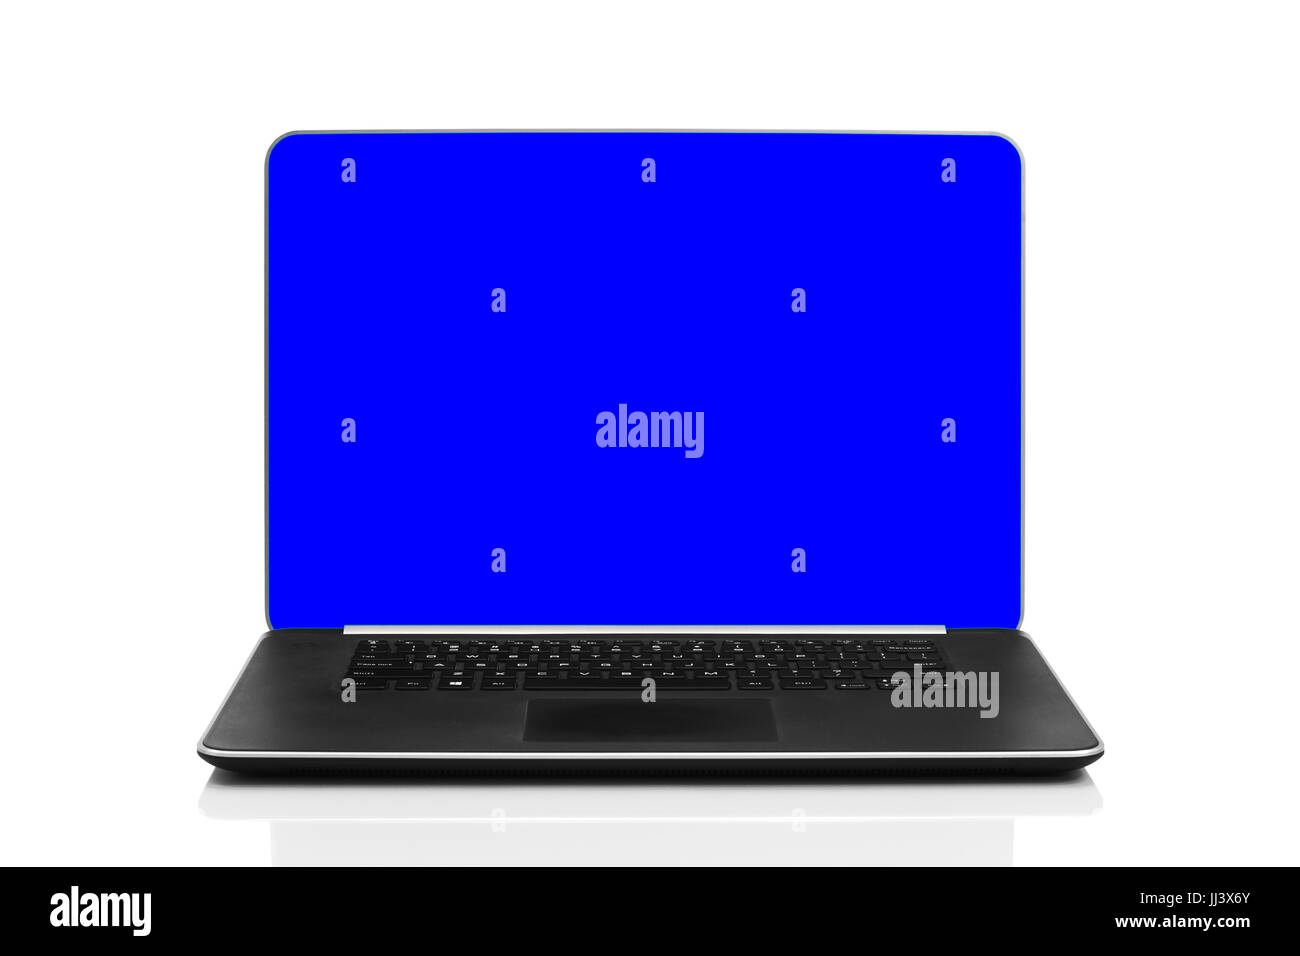 Sleek modern business laptop on white background with reflection Stock Photo